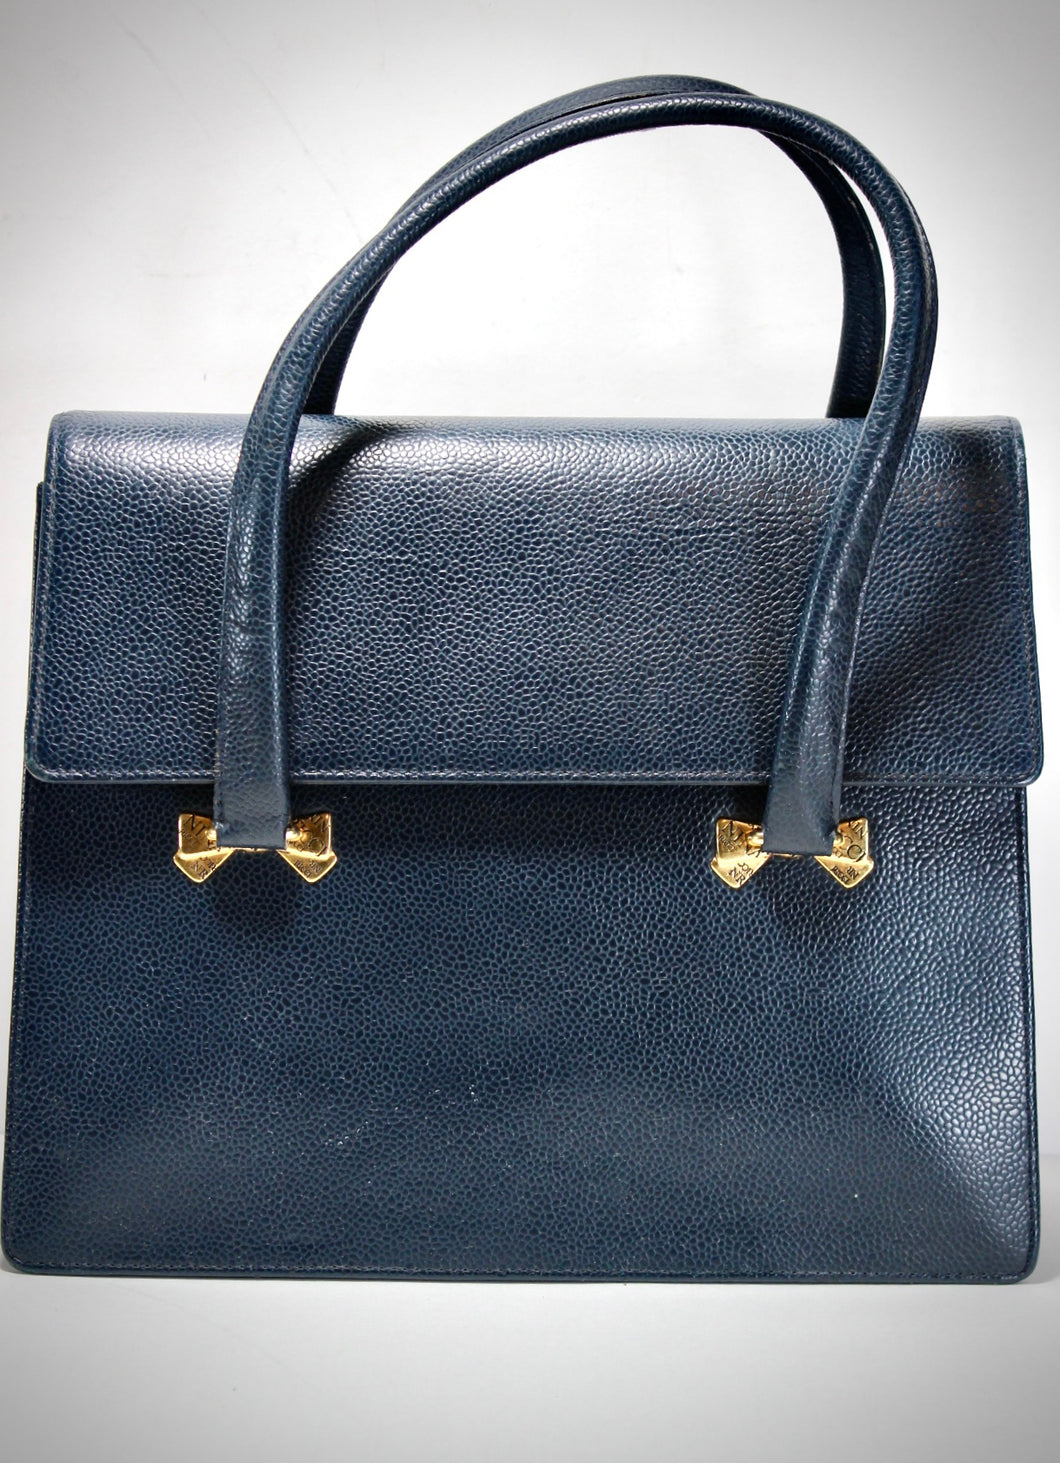 NINA RICCI Blue Textured Leather Box Bag Double Handle Bow Tie France